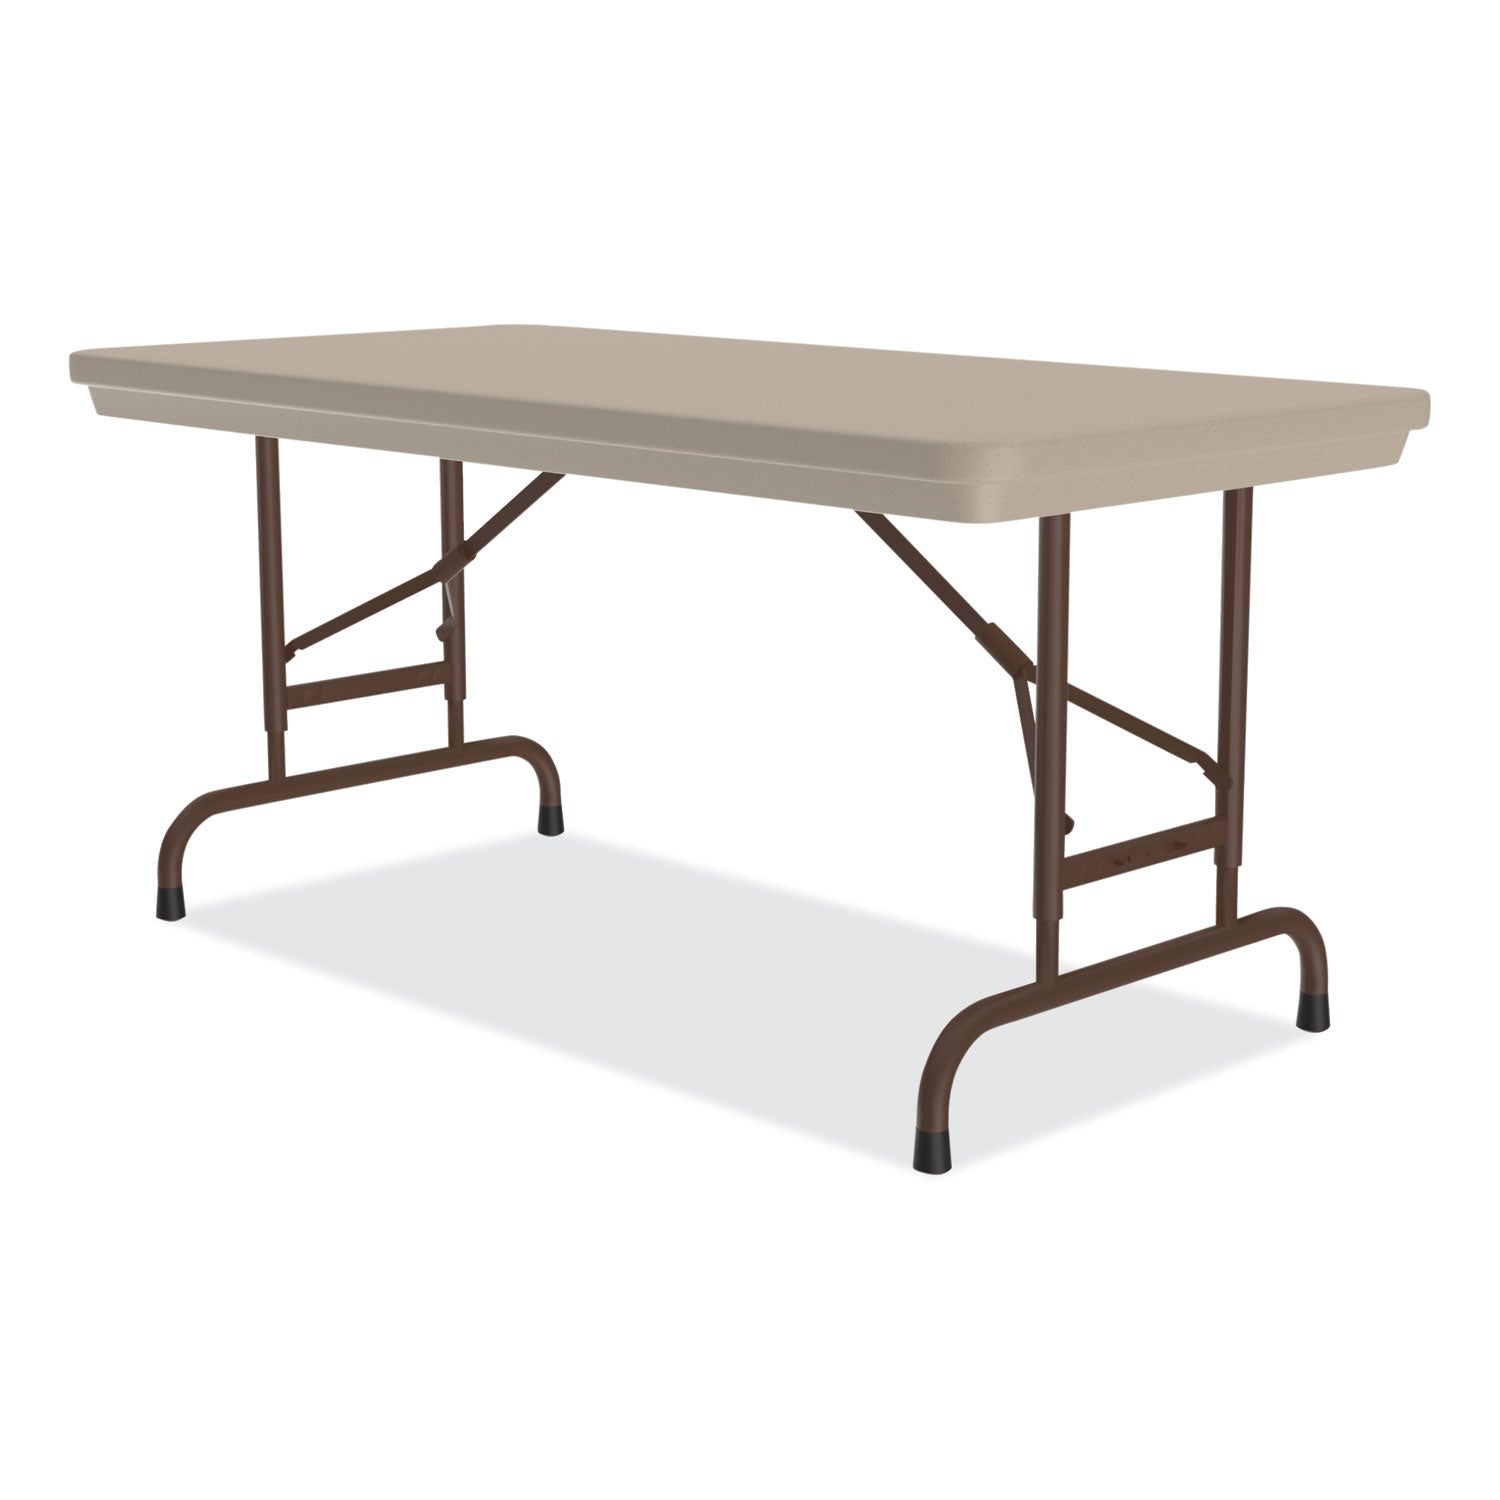 adjustable-folding-table-rectangular-48-x-24-x-22-to-32-mocha-top-brown-legs-pallet-ships-in-4-6-business-days_crlra2448244p - 6